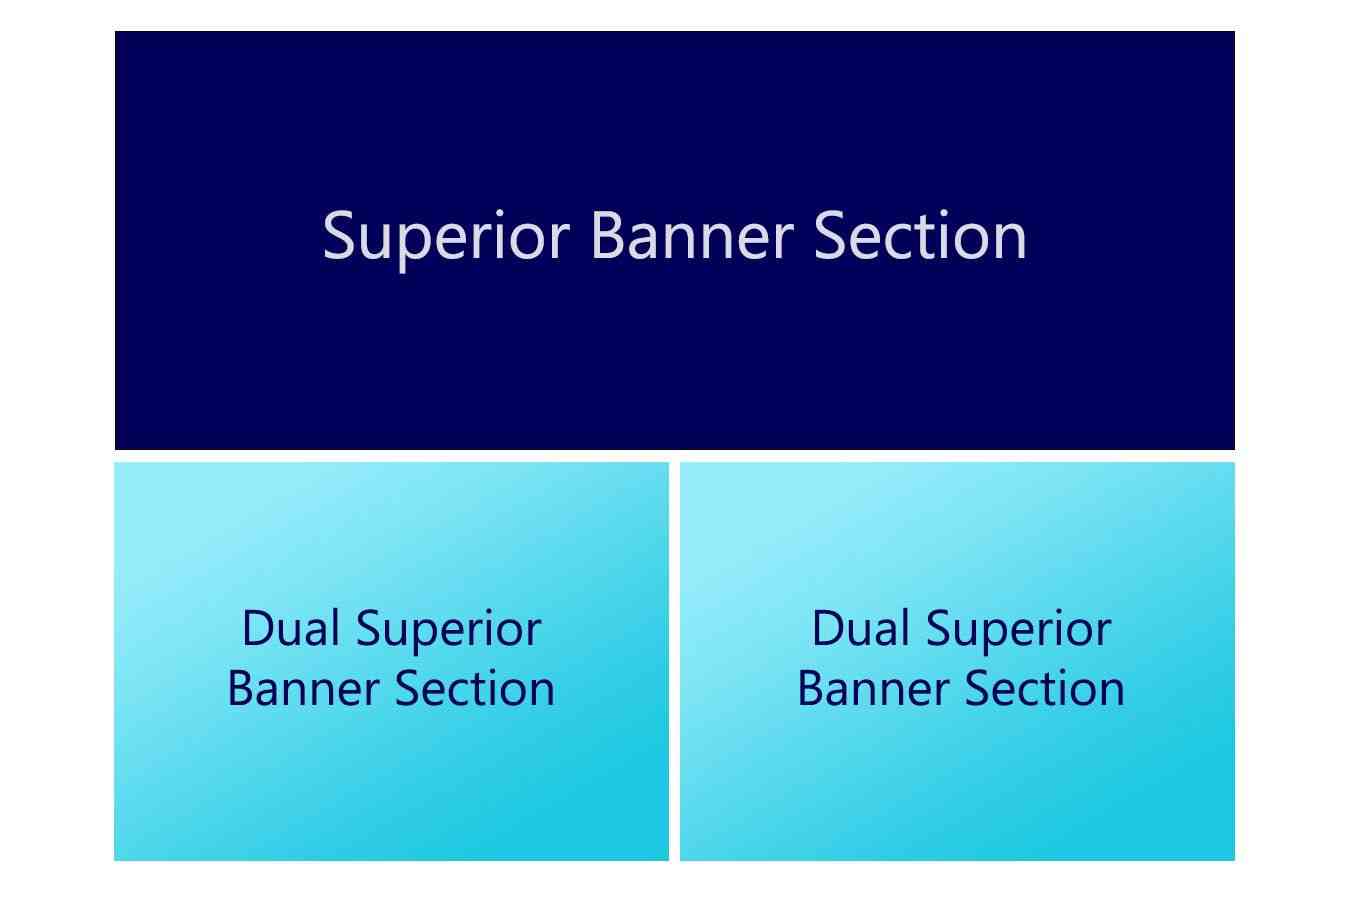 Dual Superior Banner